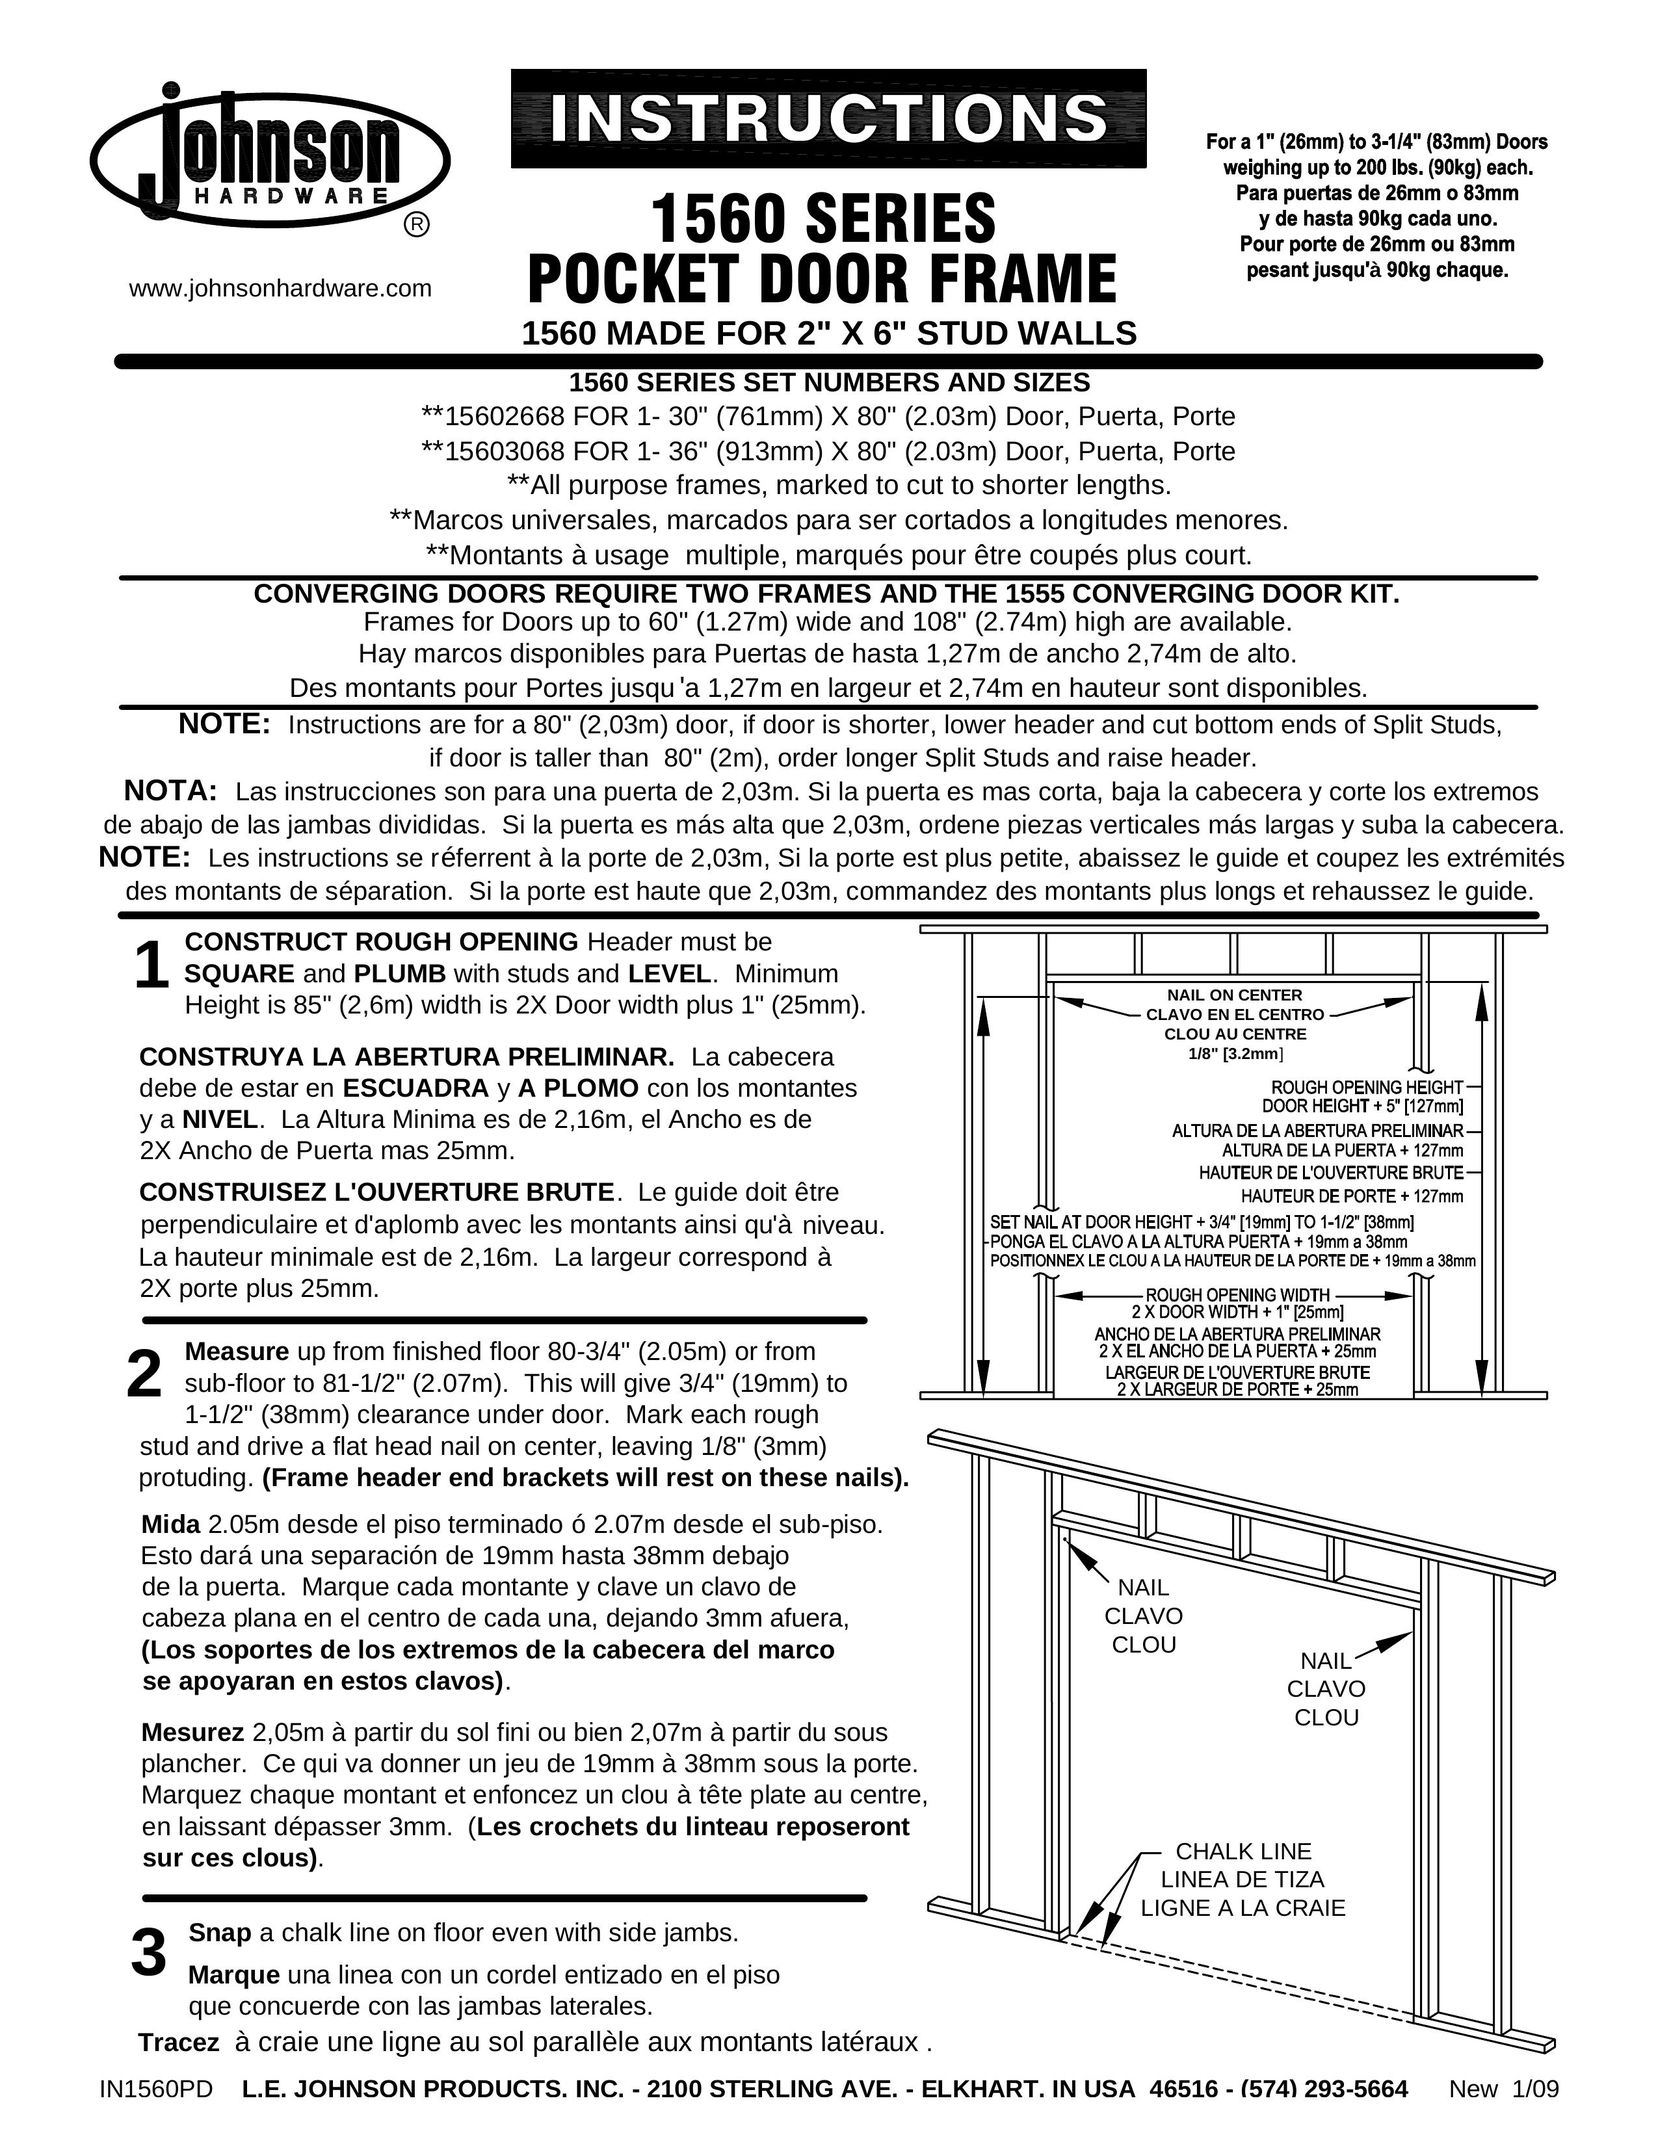 Johnson Hardware 15603068 Door User Manual